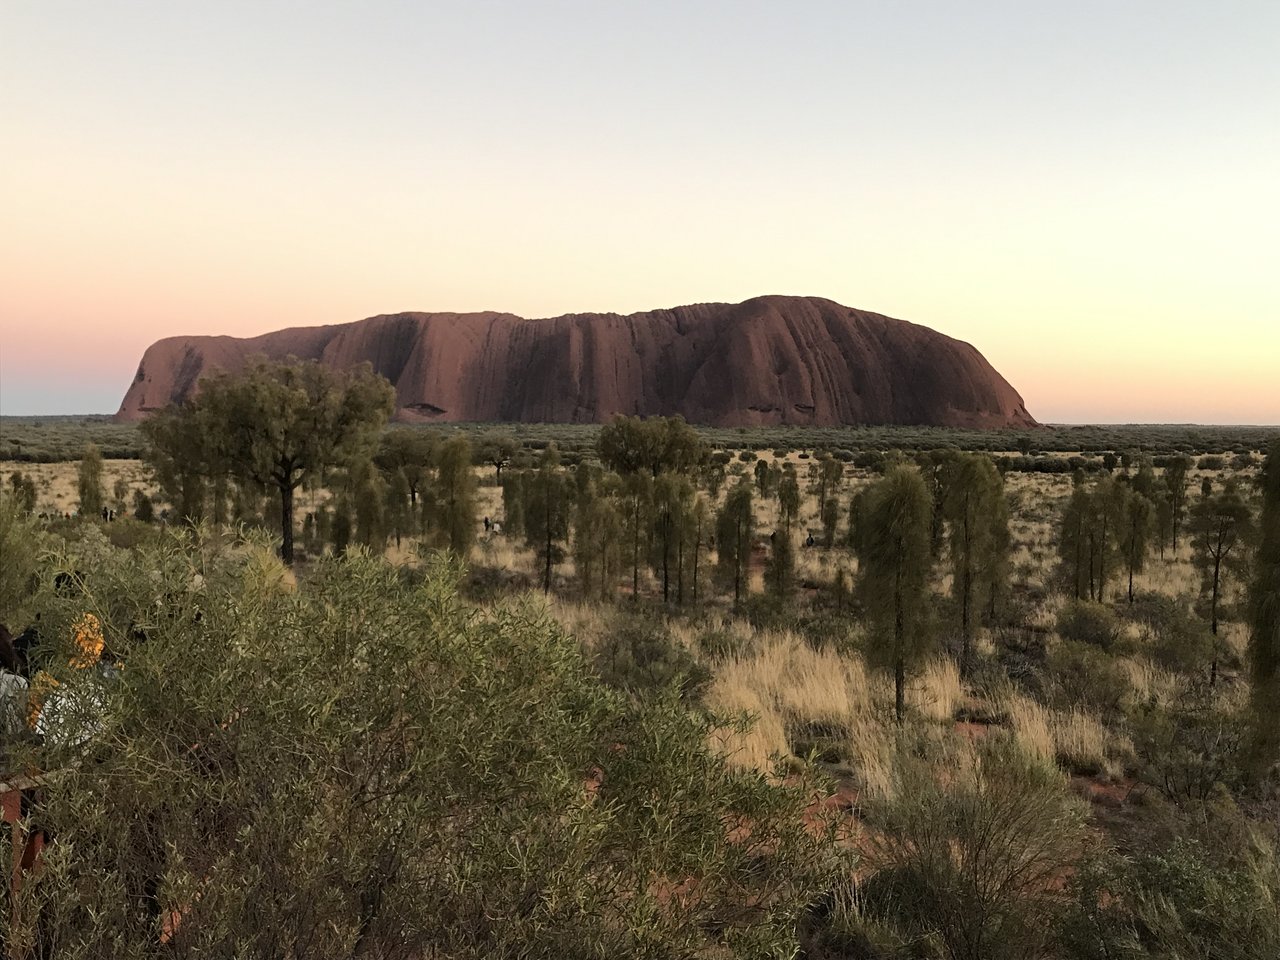 Watching the sunrise over Uluru, Australia